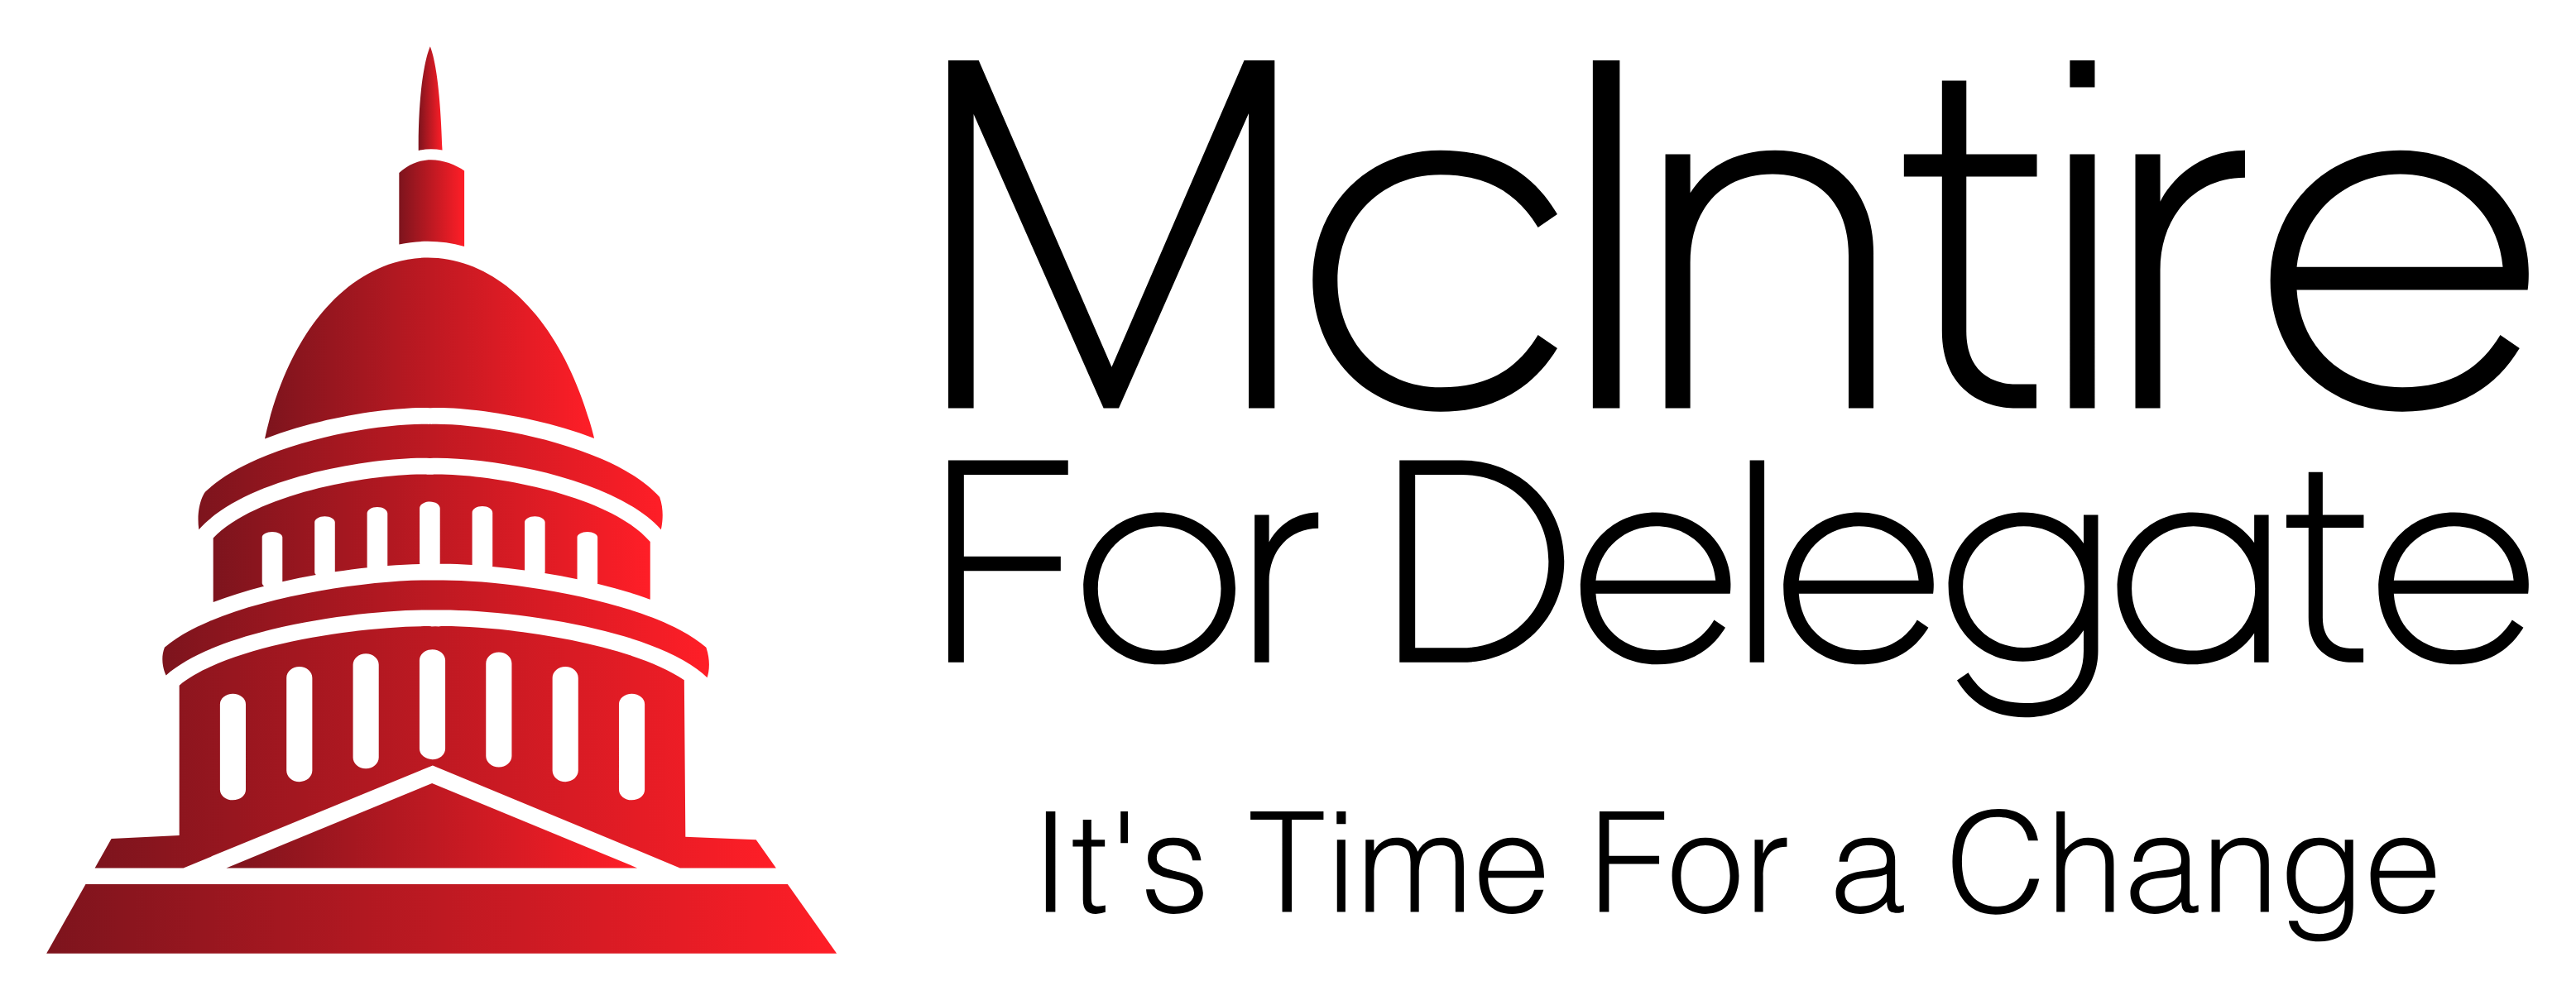 McIntire for Delegate 2020 logo